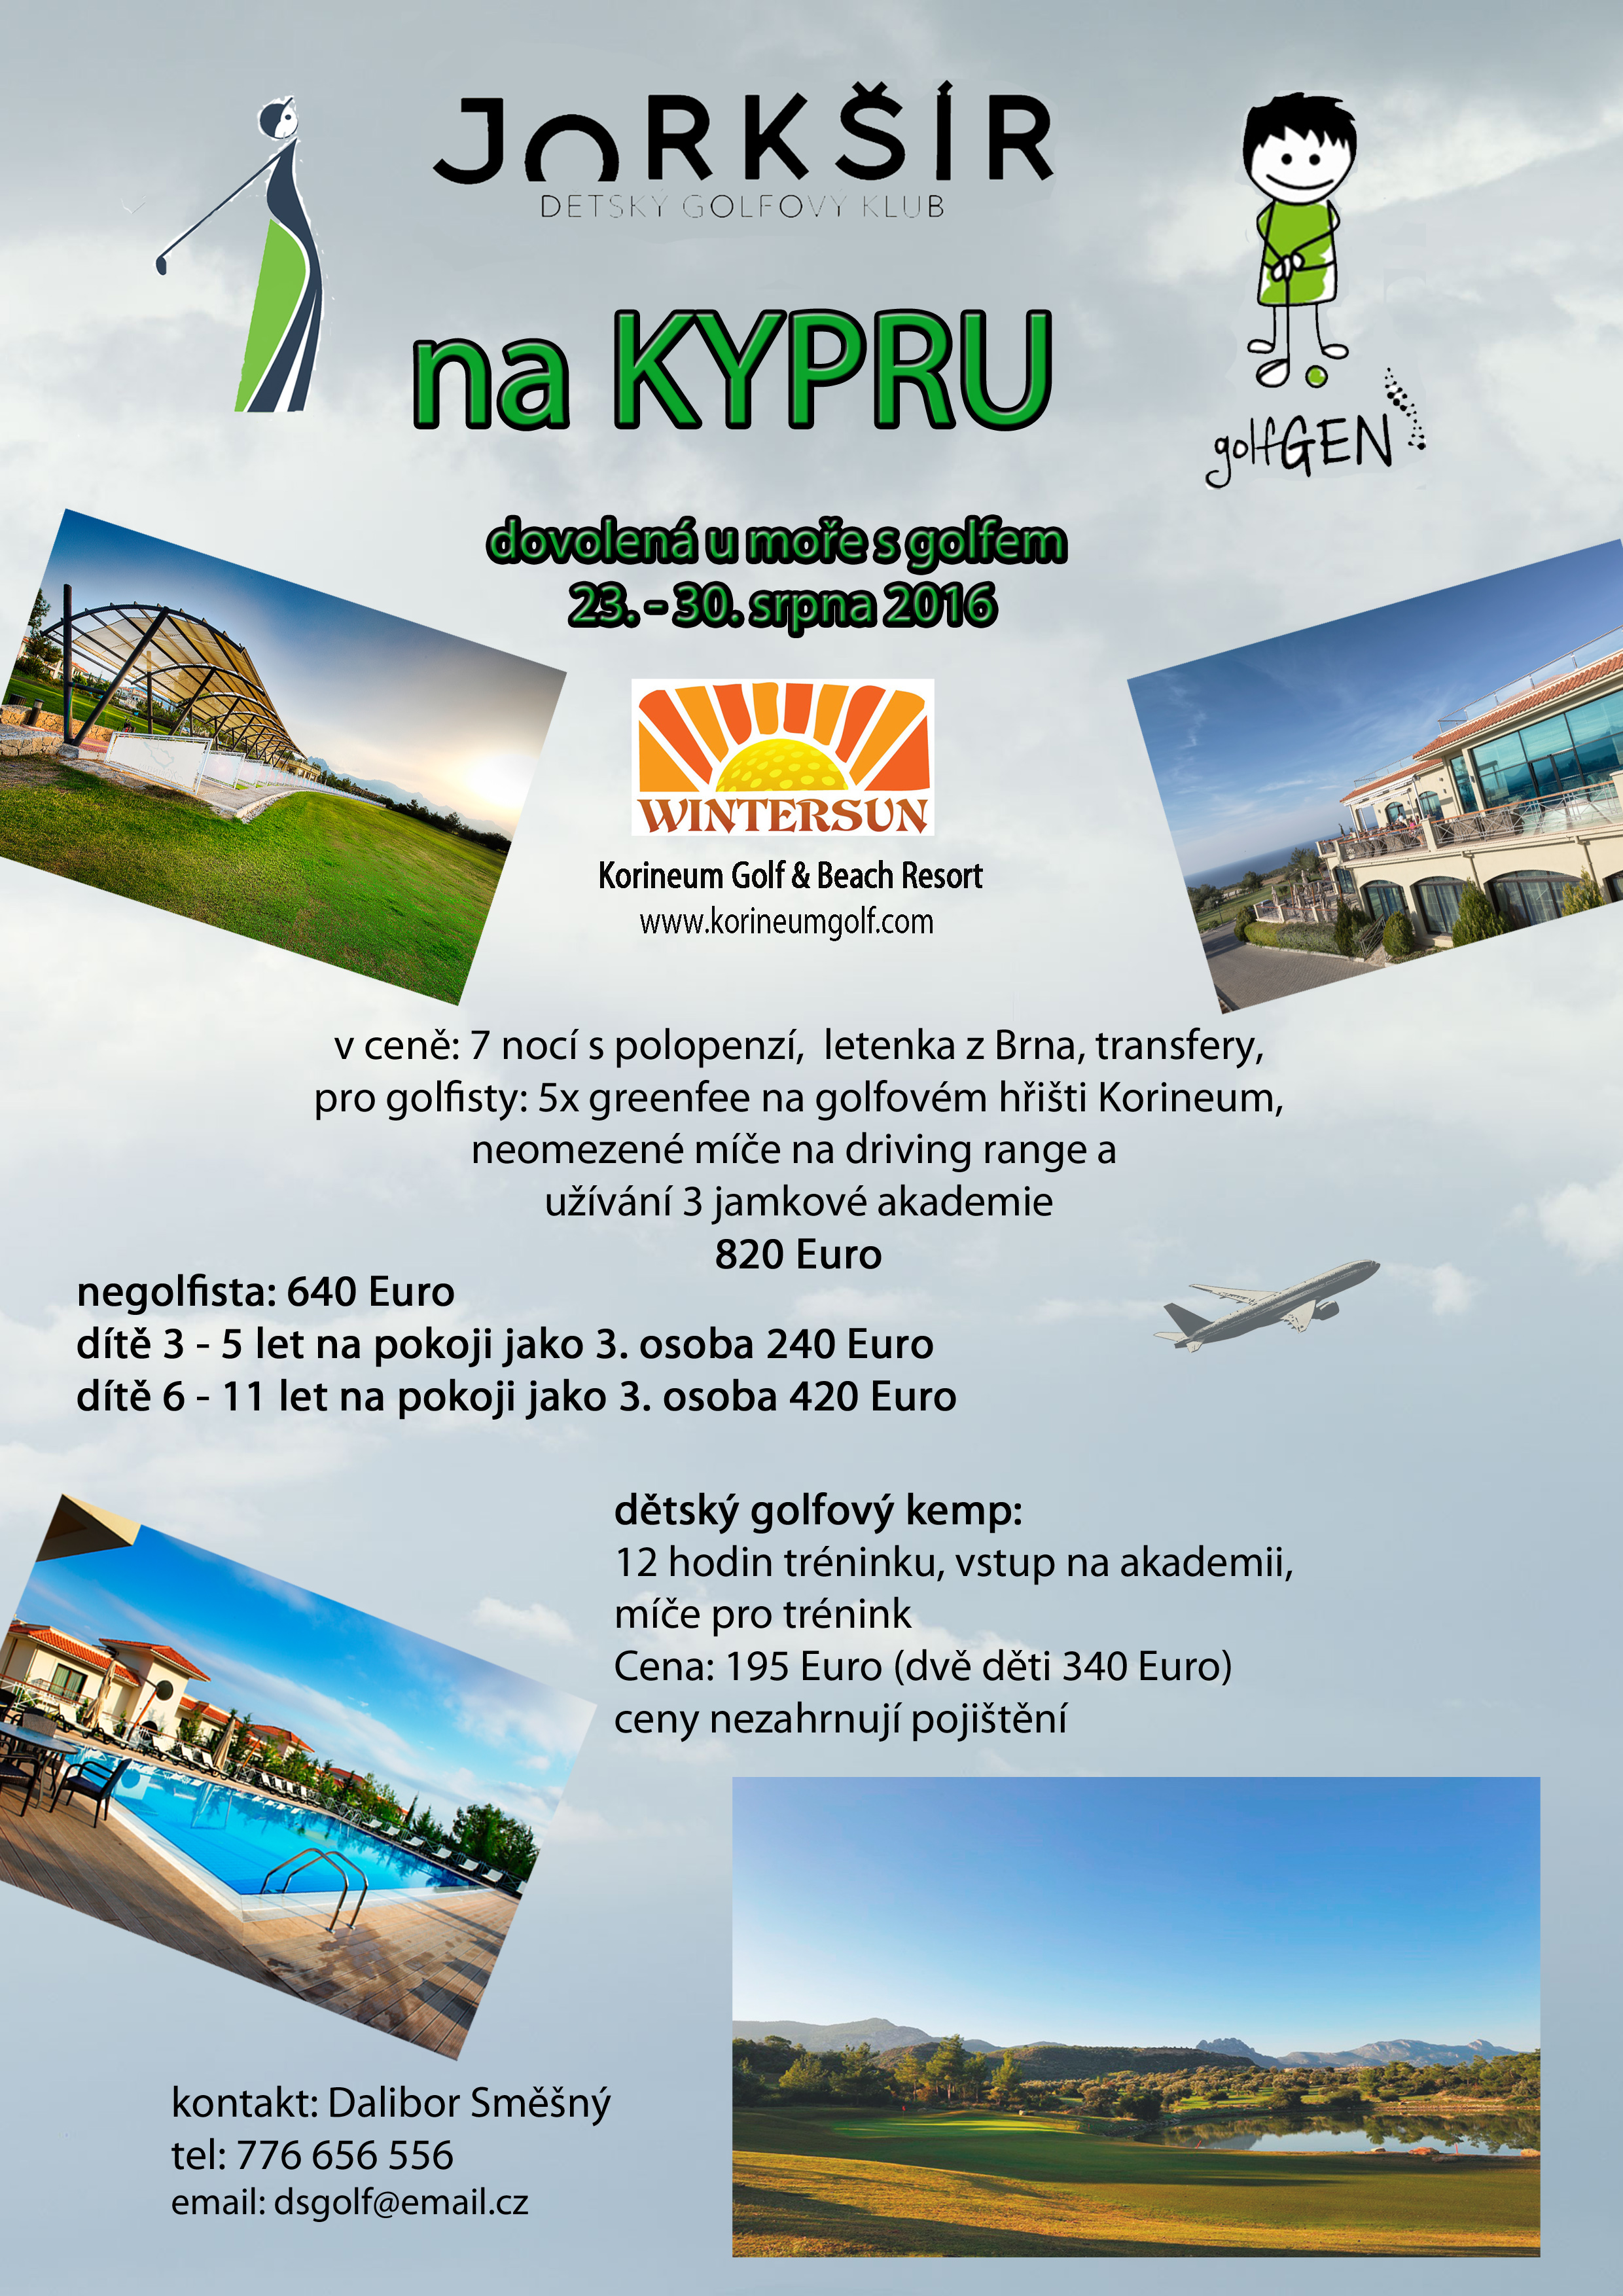 kypr 2016 JorksirA4f